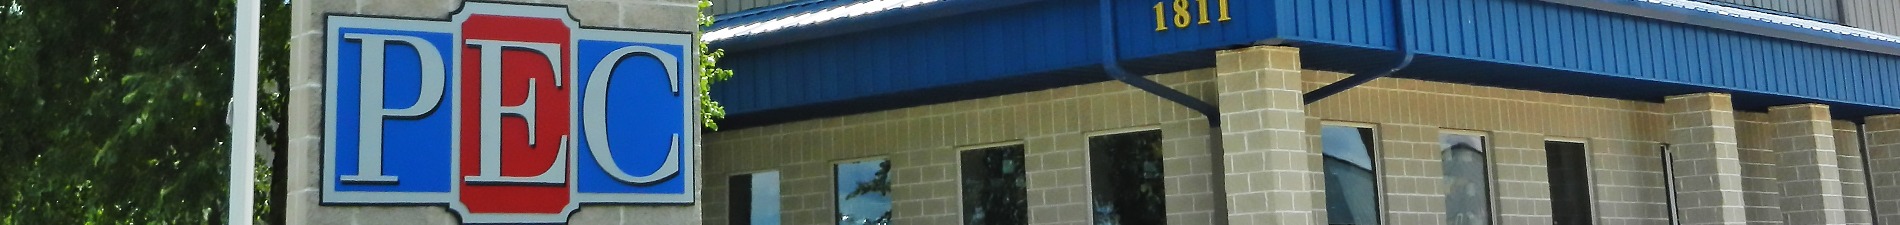 Header image of PEC building exterior